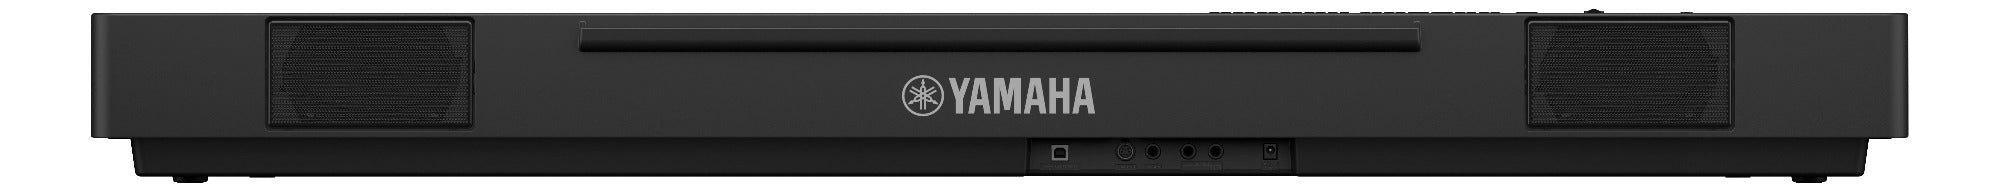 Yamaha P-225B Portable Digital Piano - Black